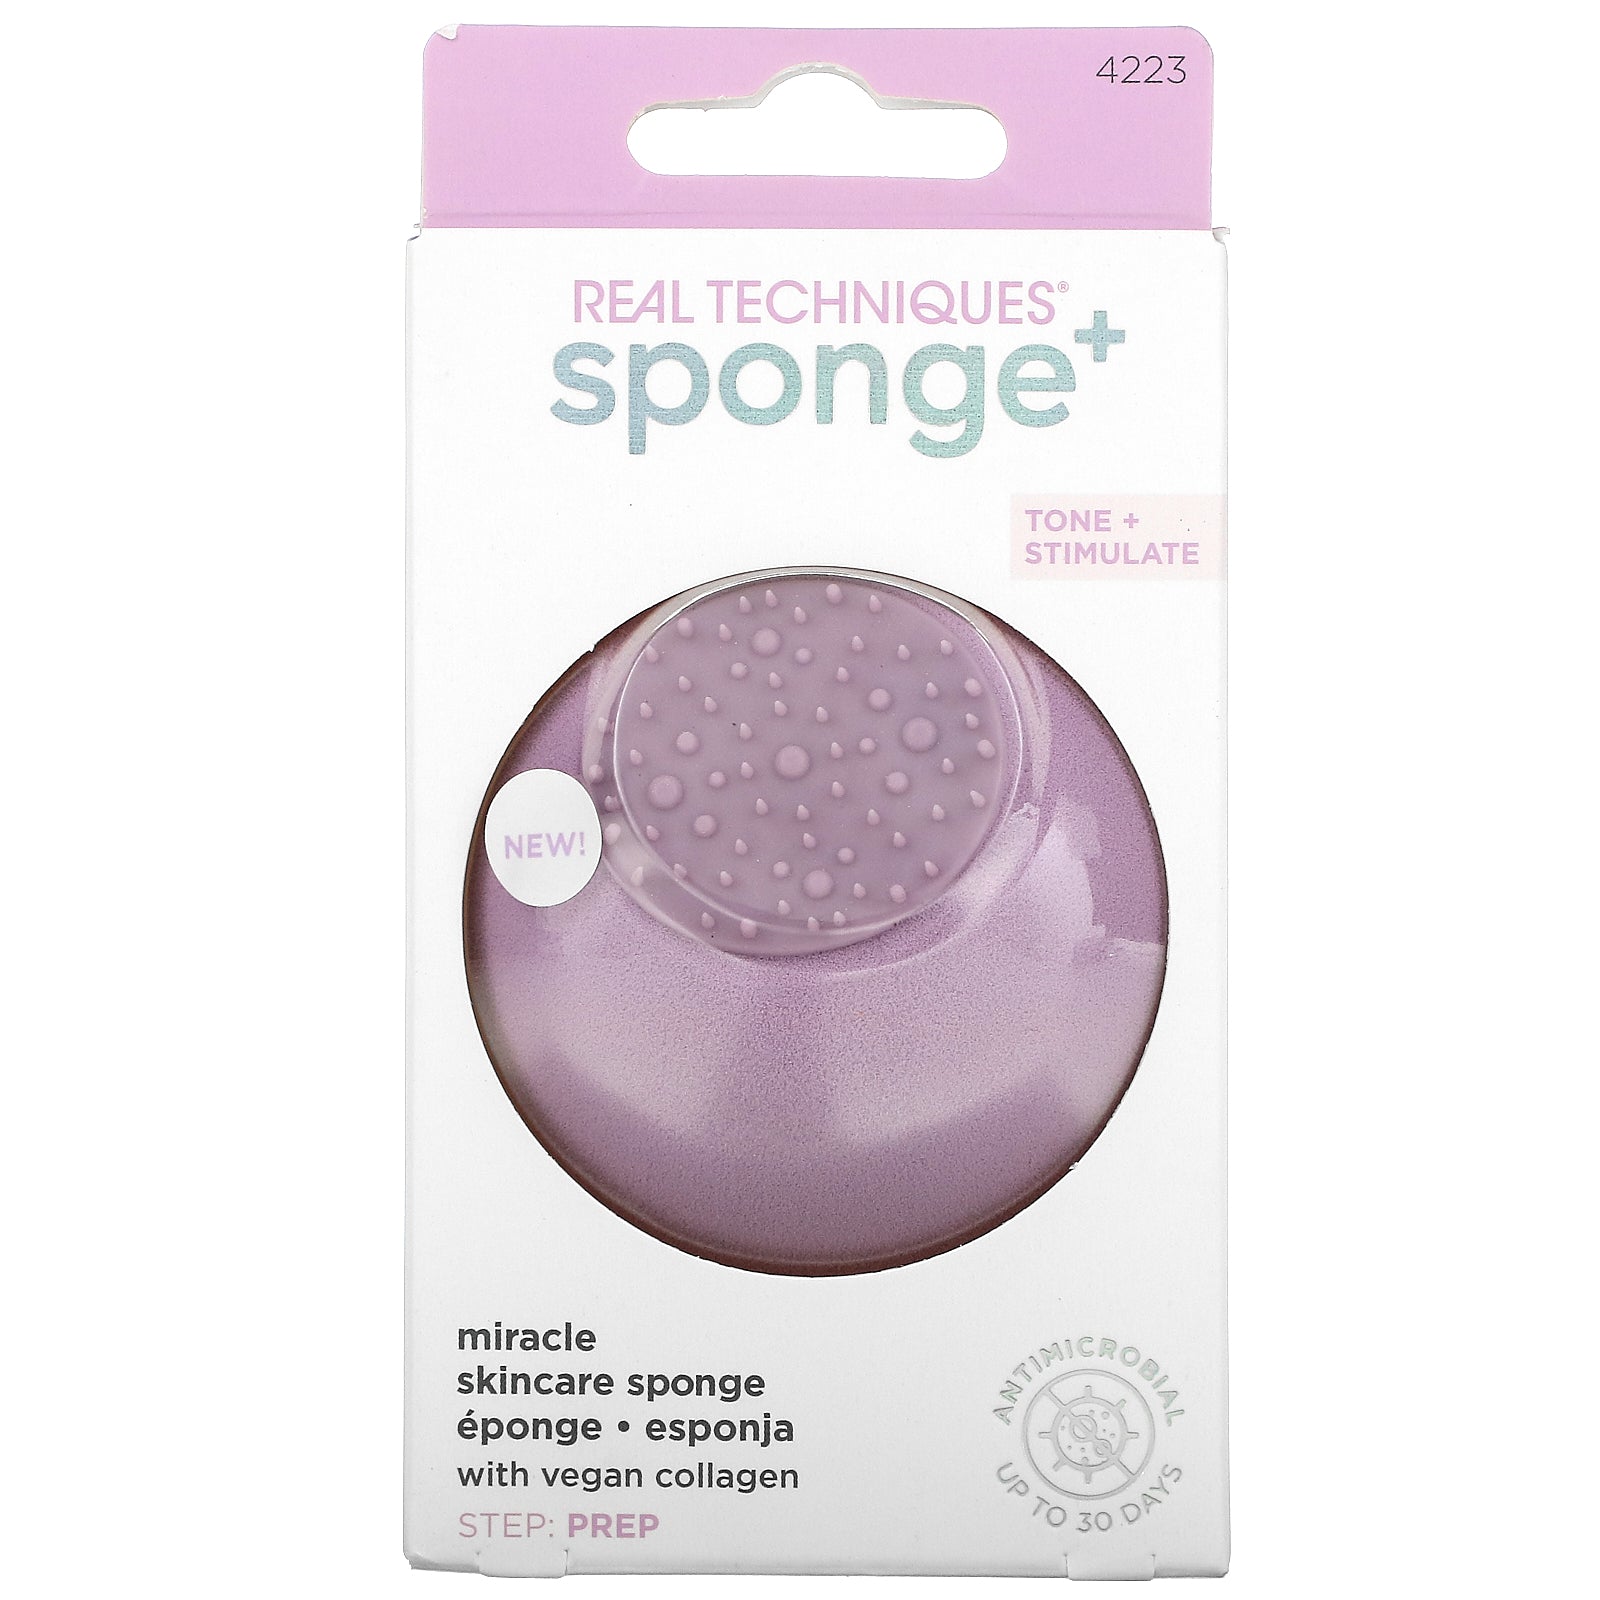 Real Techniques Sponge+Miracle Skincare Sponge With Vegan Collagen